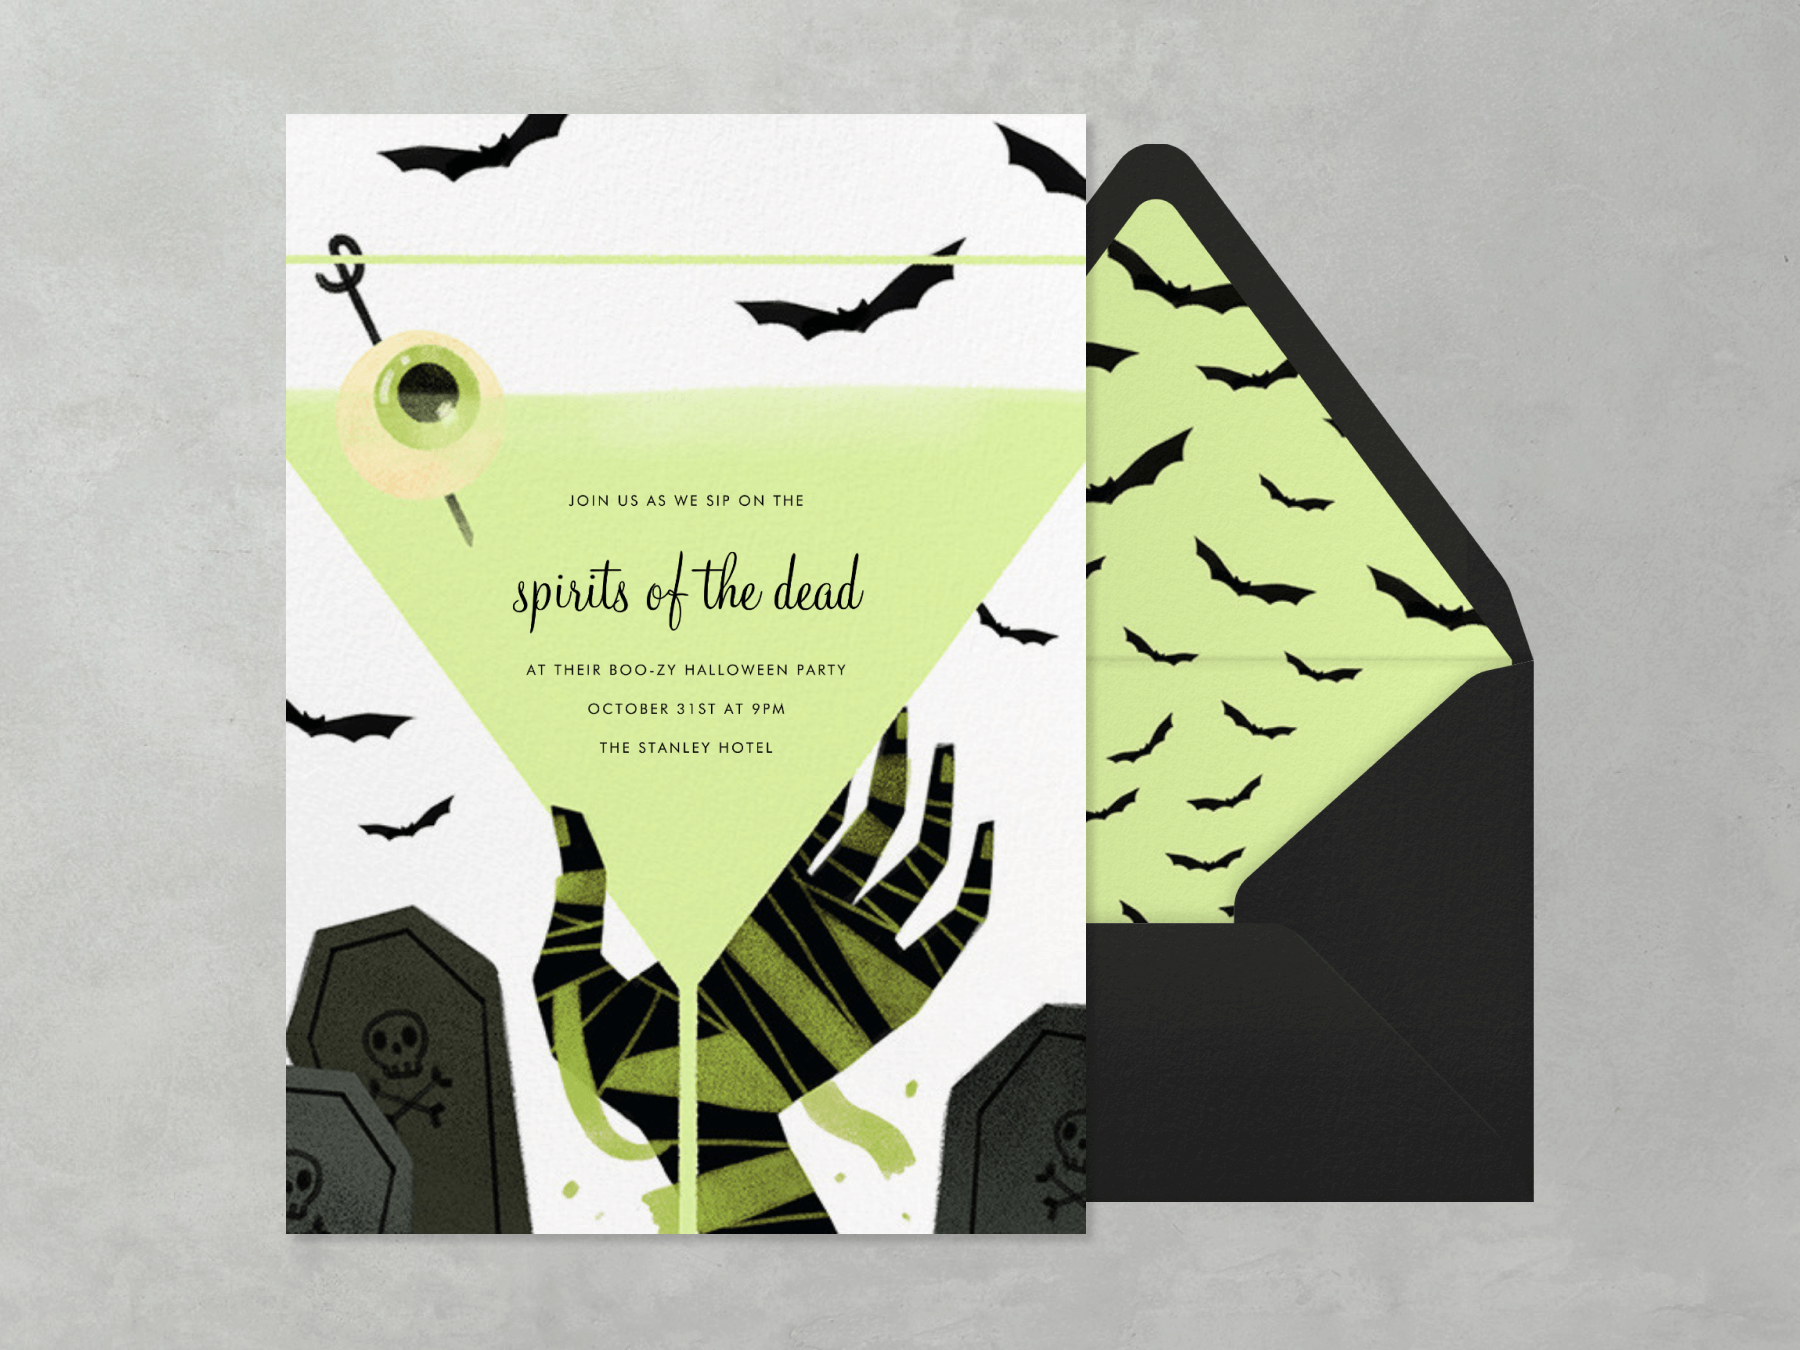 A Halloween invitation featuring a mummy’s hand holding a martini glass with an eyeball garnish.